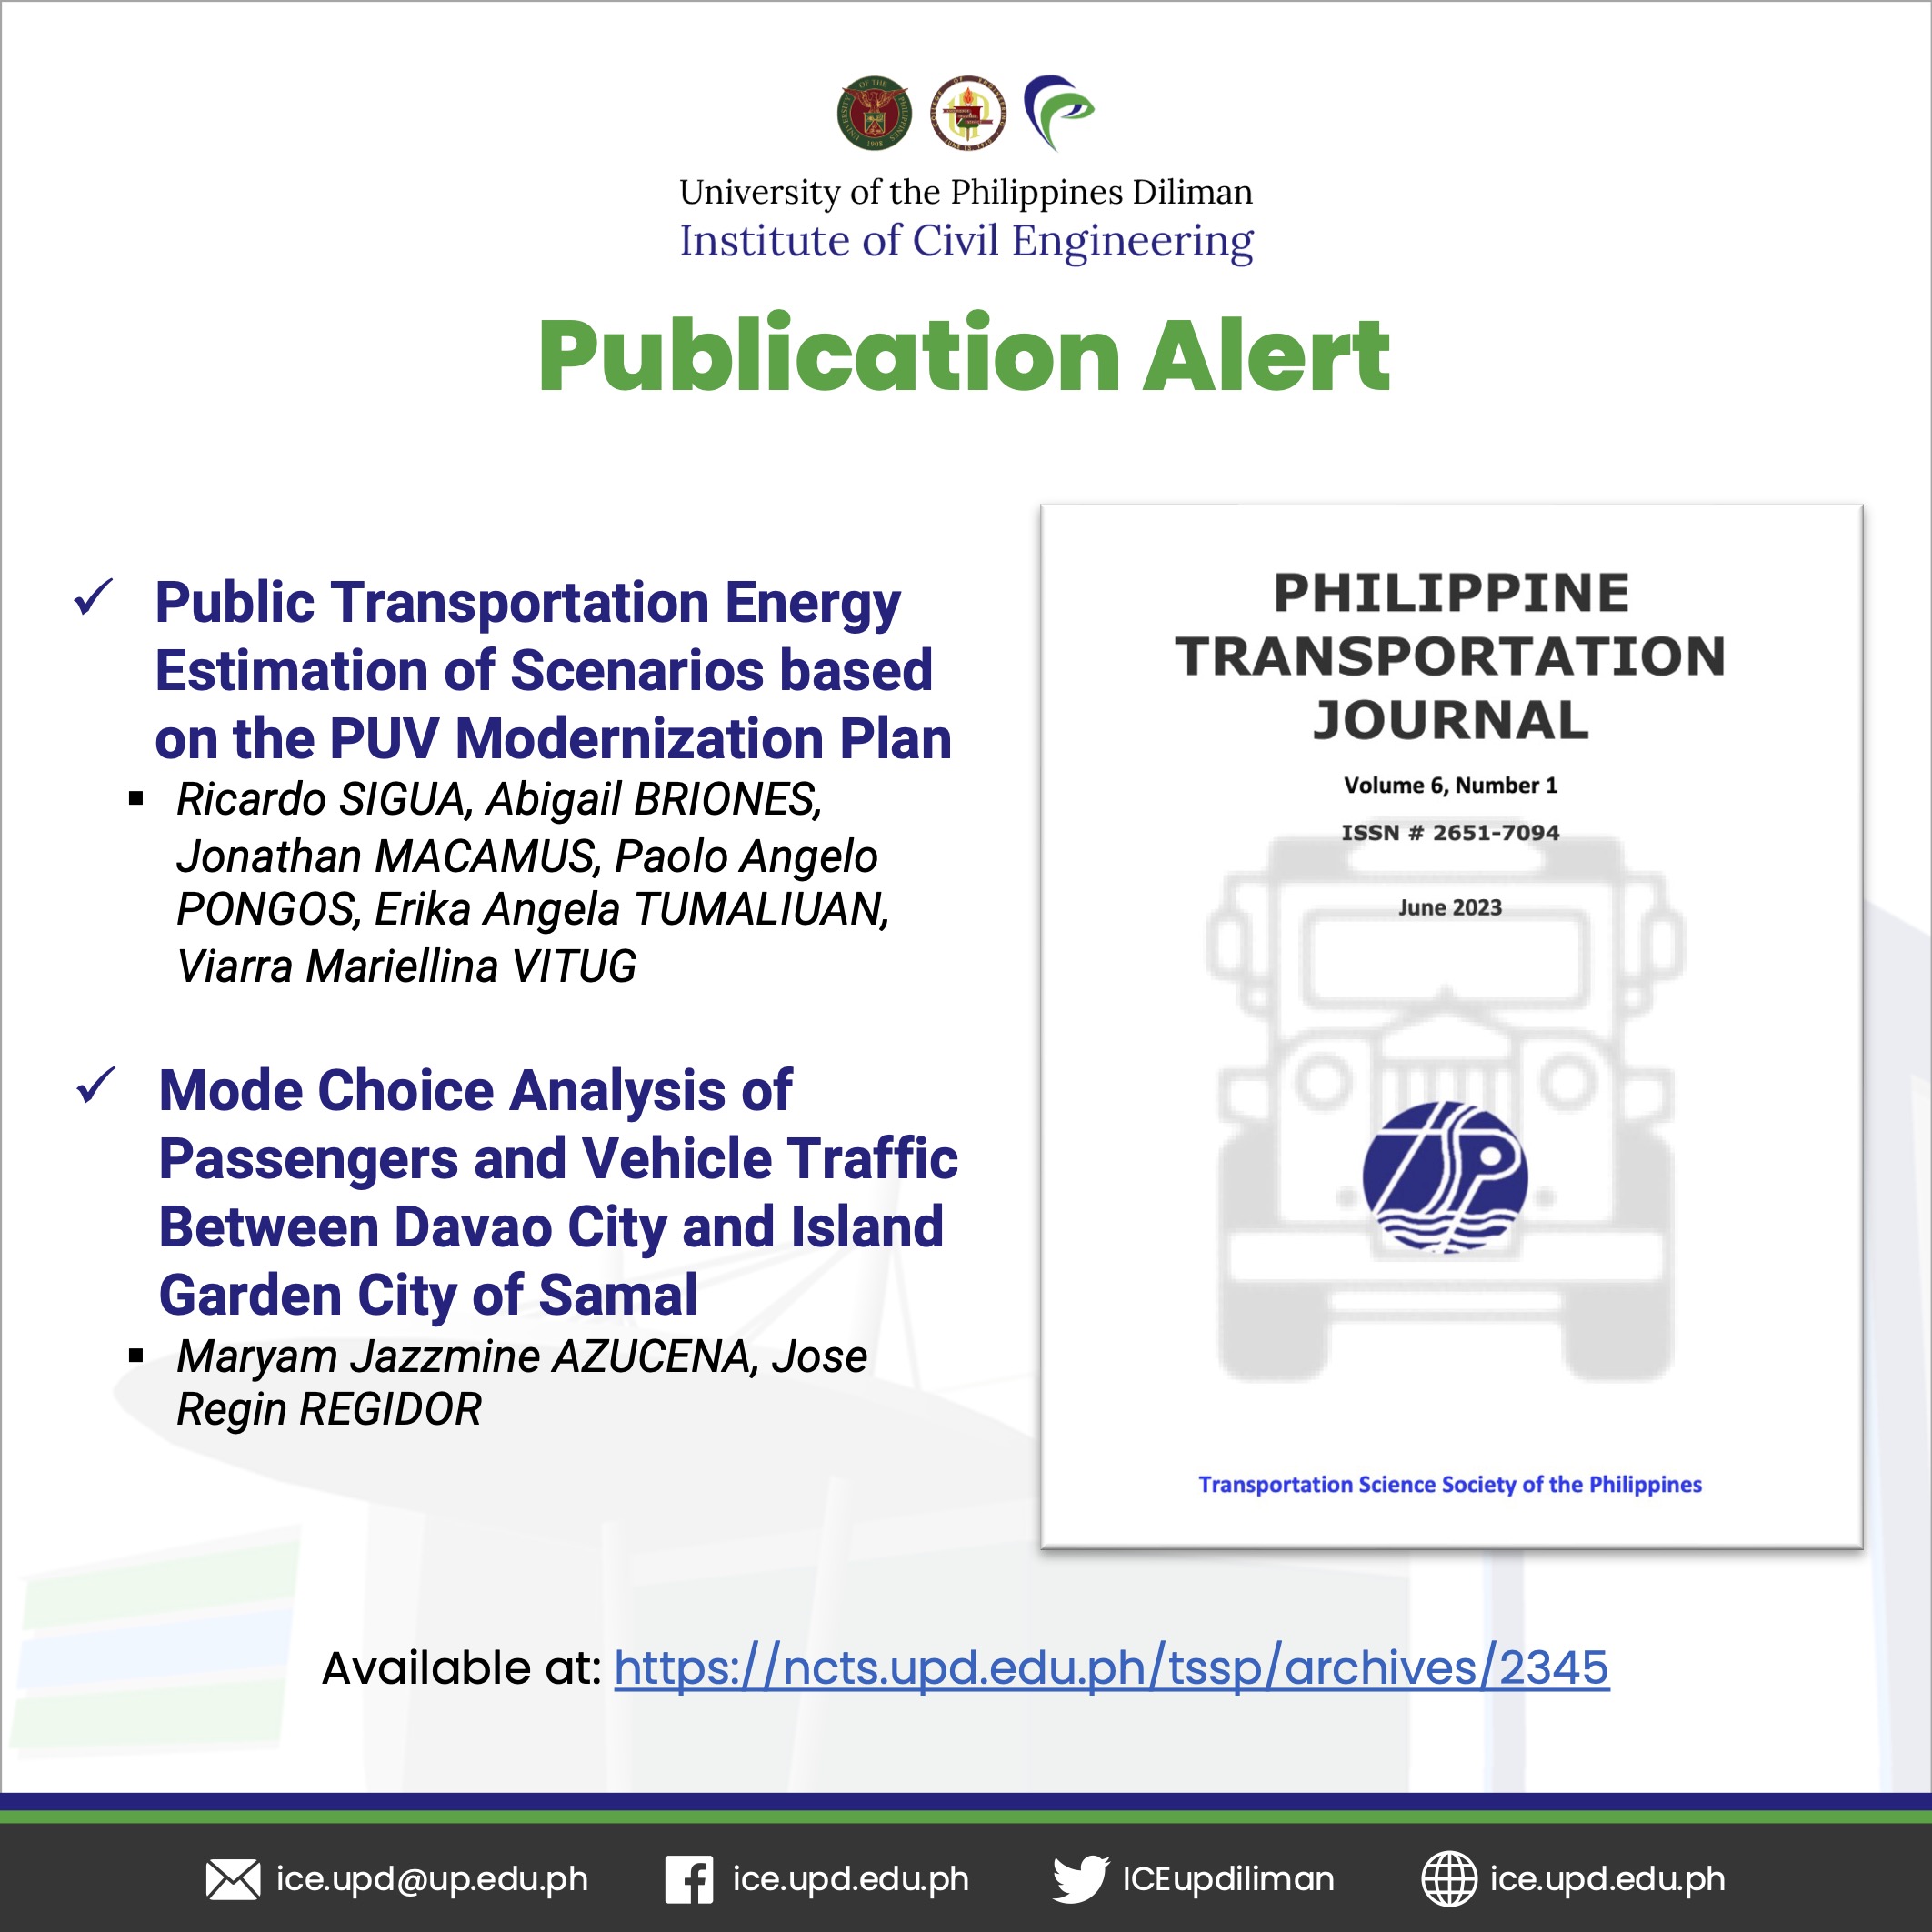 Publication Alert: Philippine Transportation Journal June 2023 issue